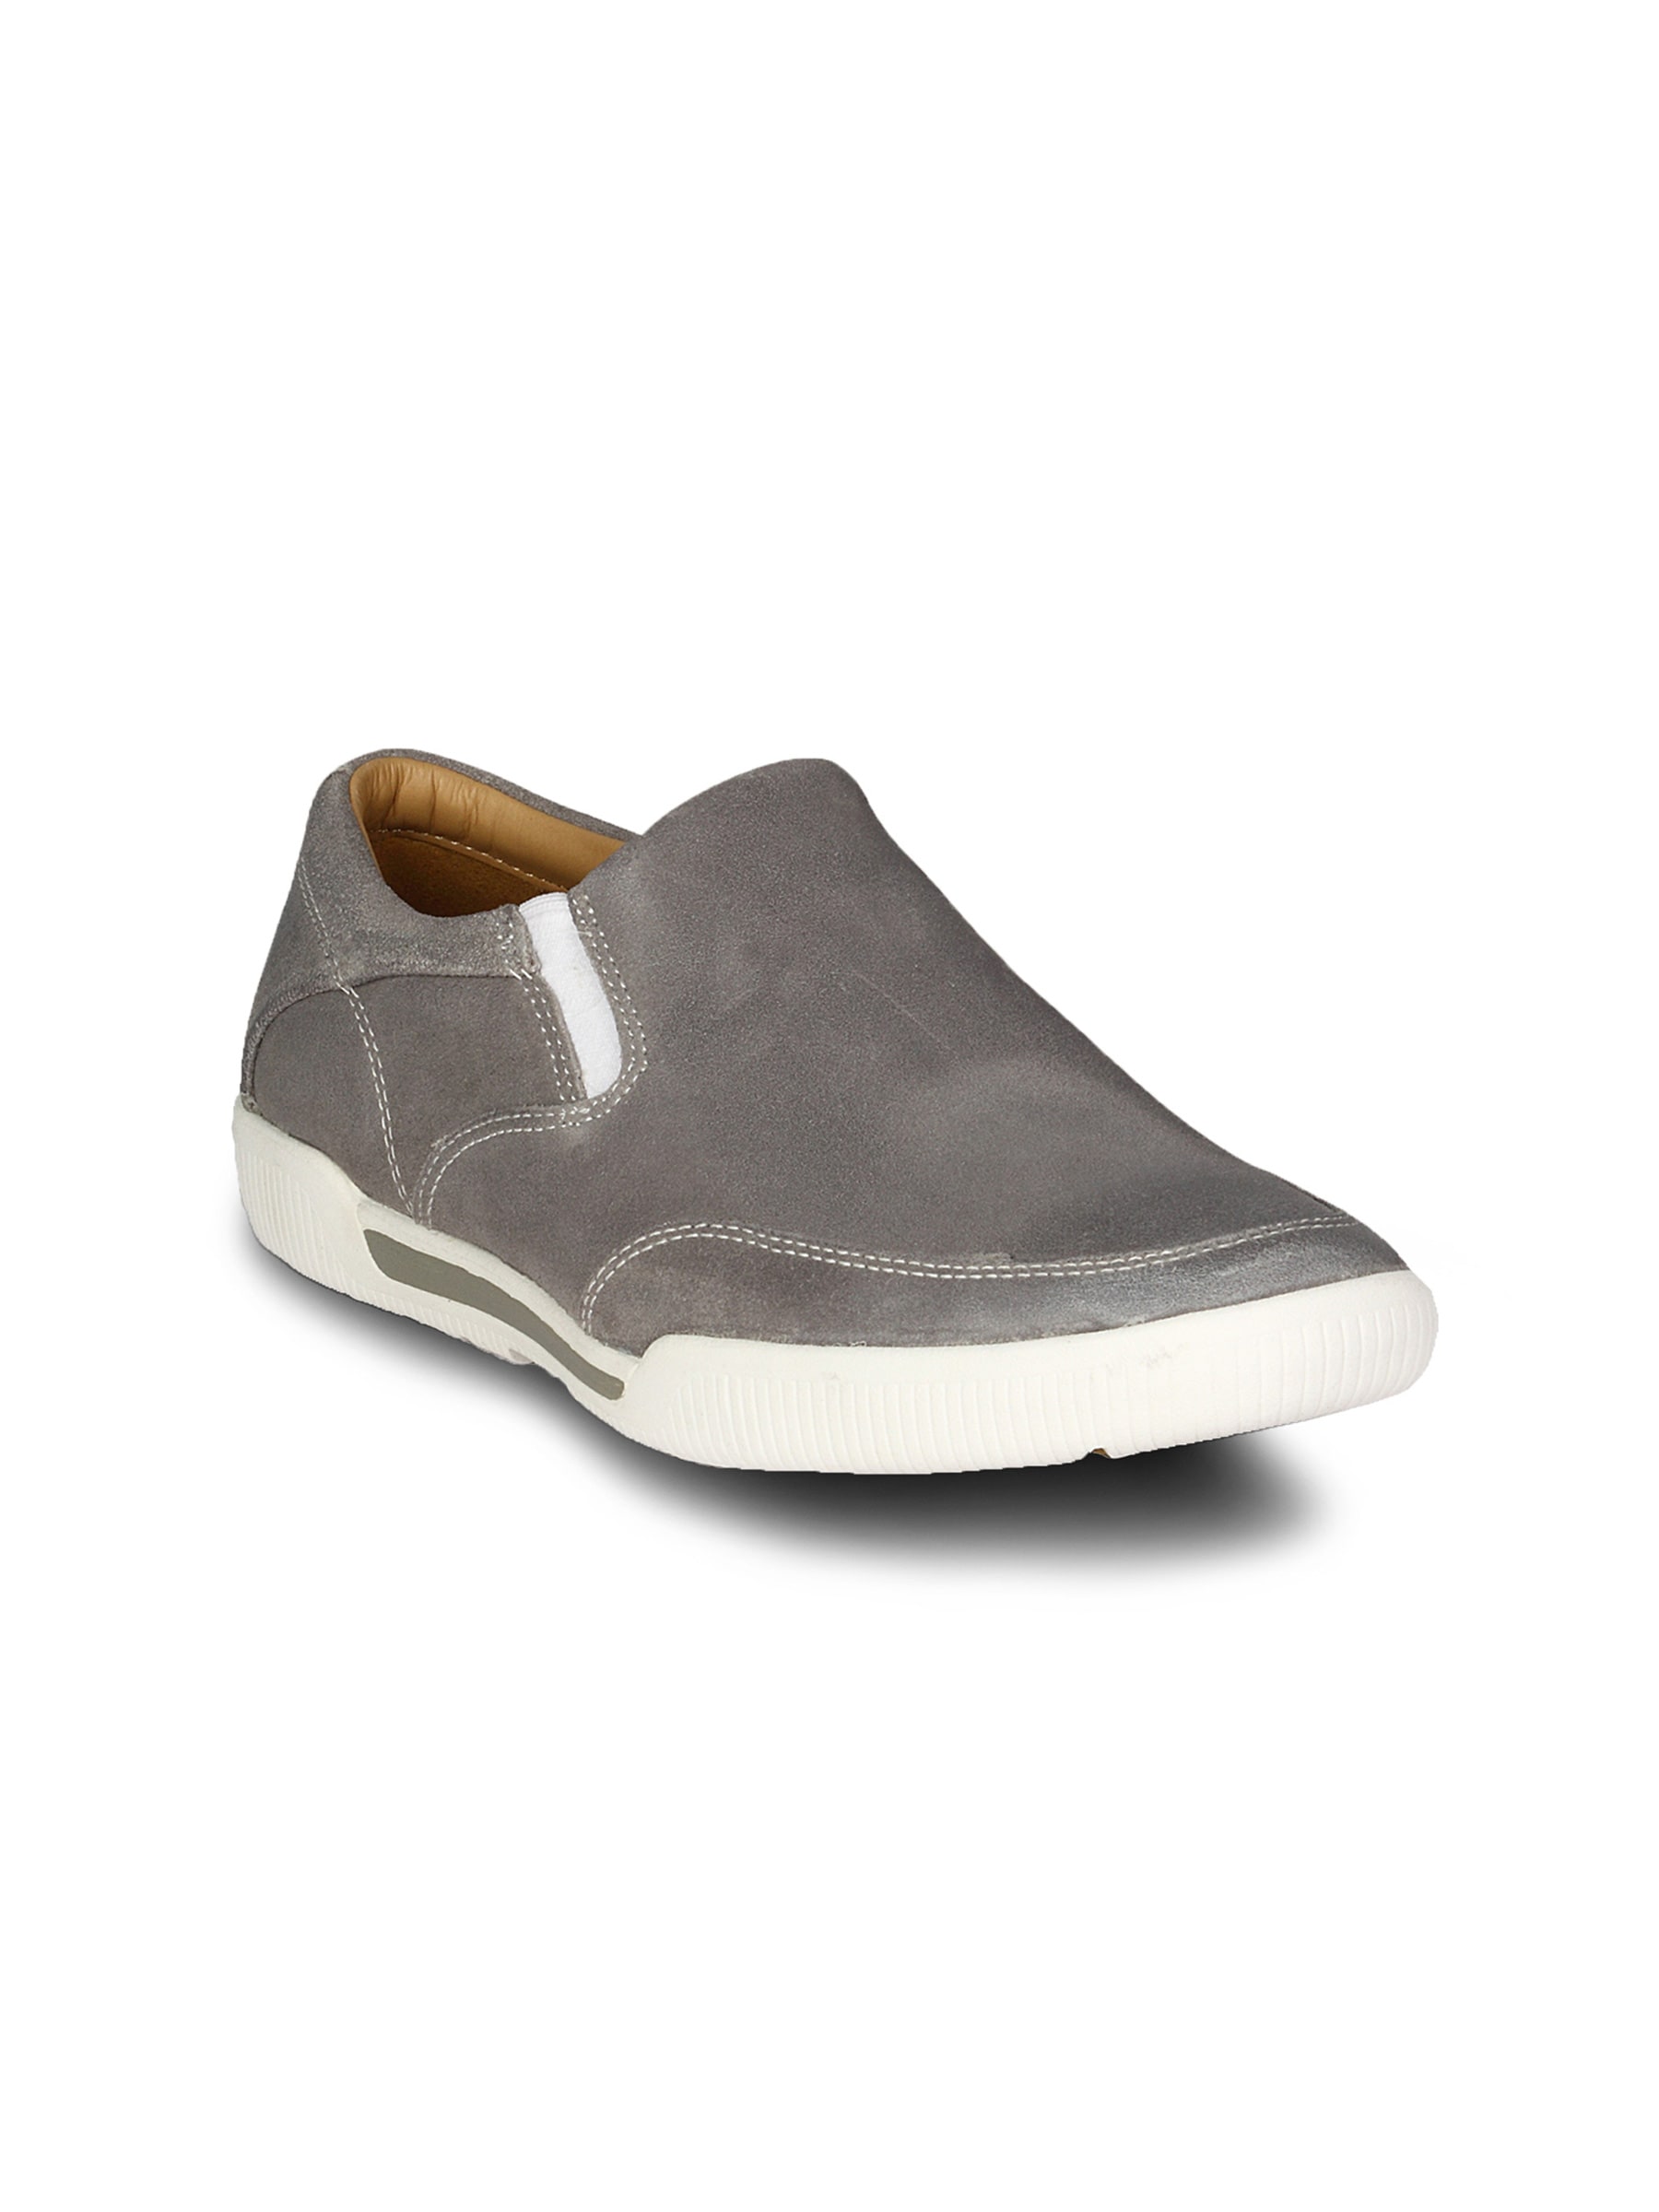 Rockport Men's Capella Grey Shoe